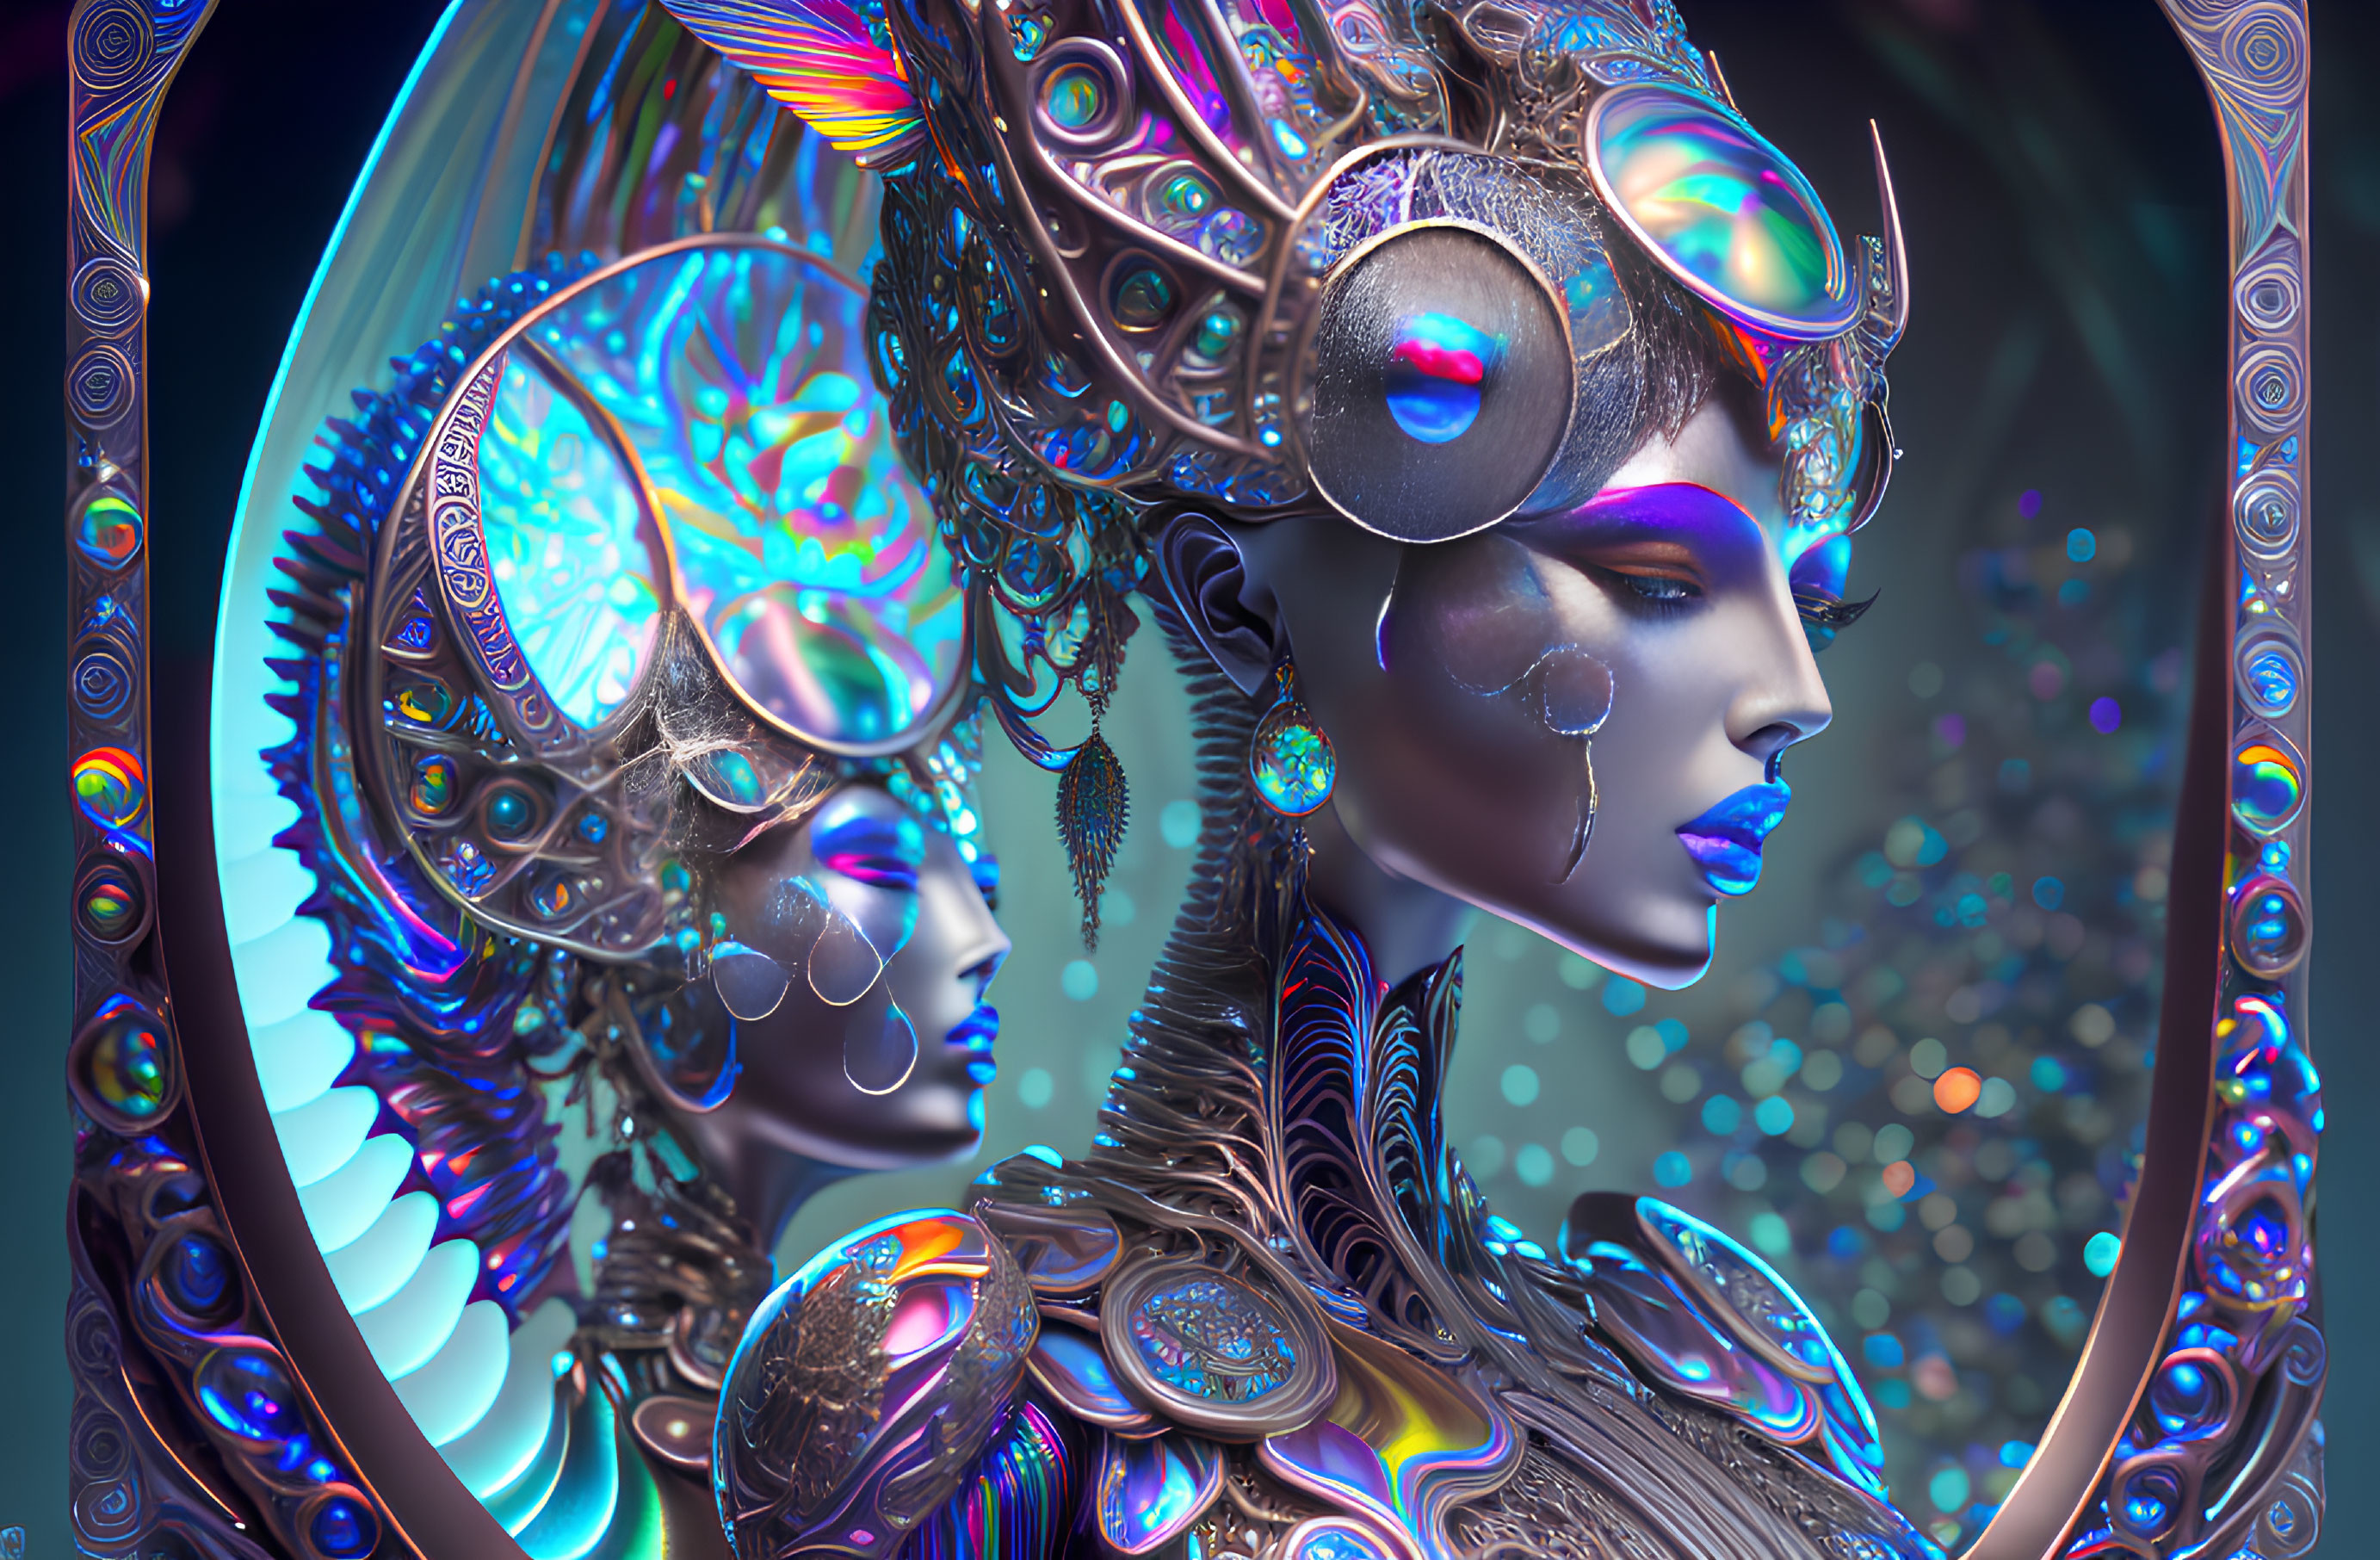 Futuristic digital artwork of two figures with elaborate metallic headdresses